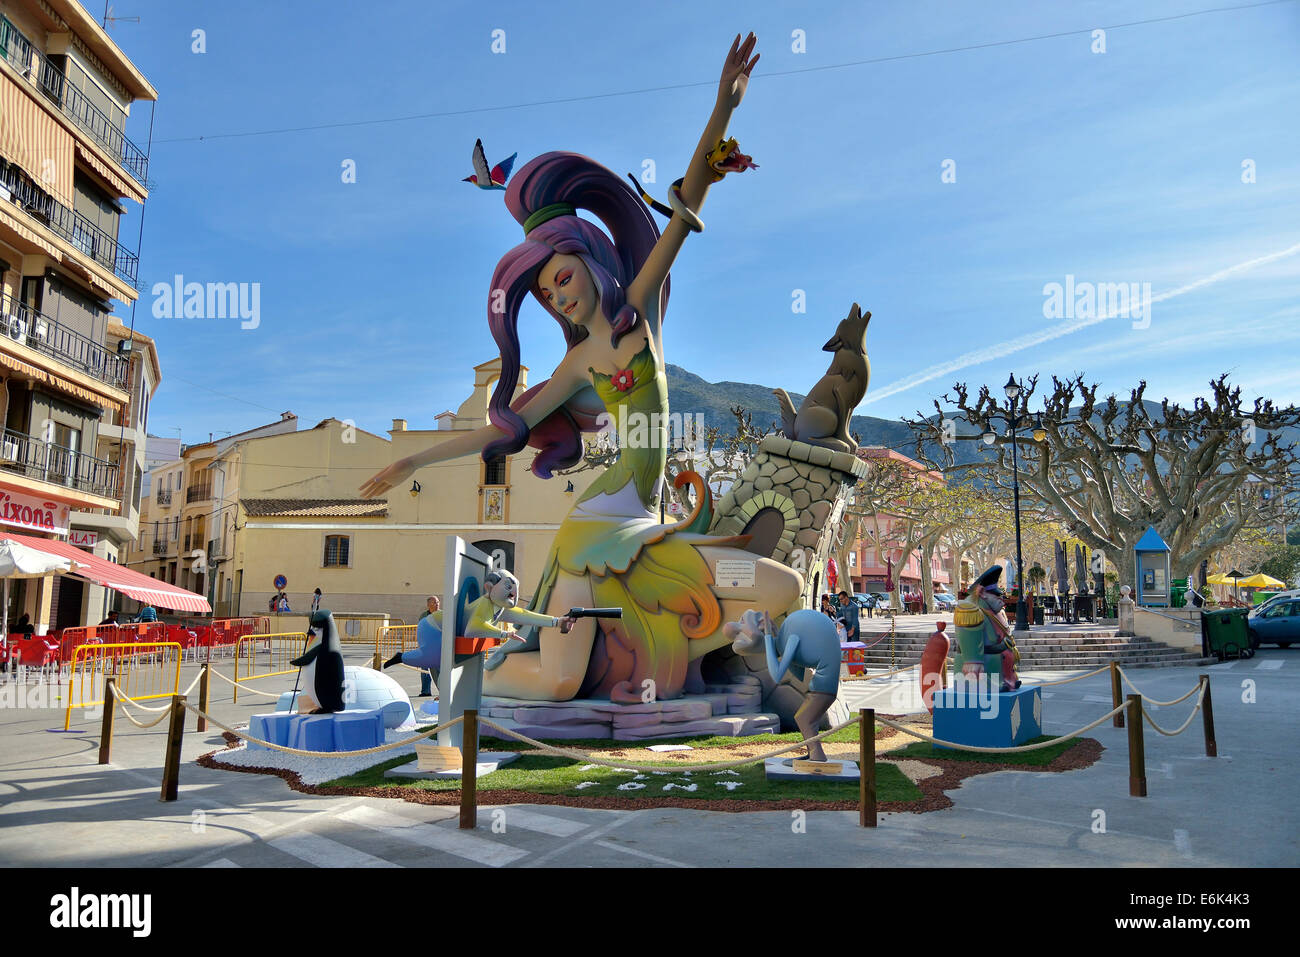 Falla papier-mâché figures at the Las Fallas Spring Festival, Pego, Province of Alicante, Spain Stock Photo